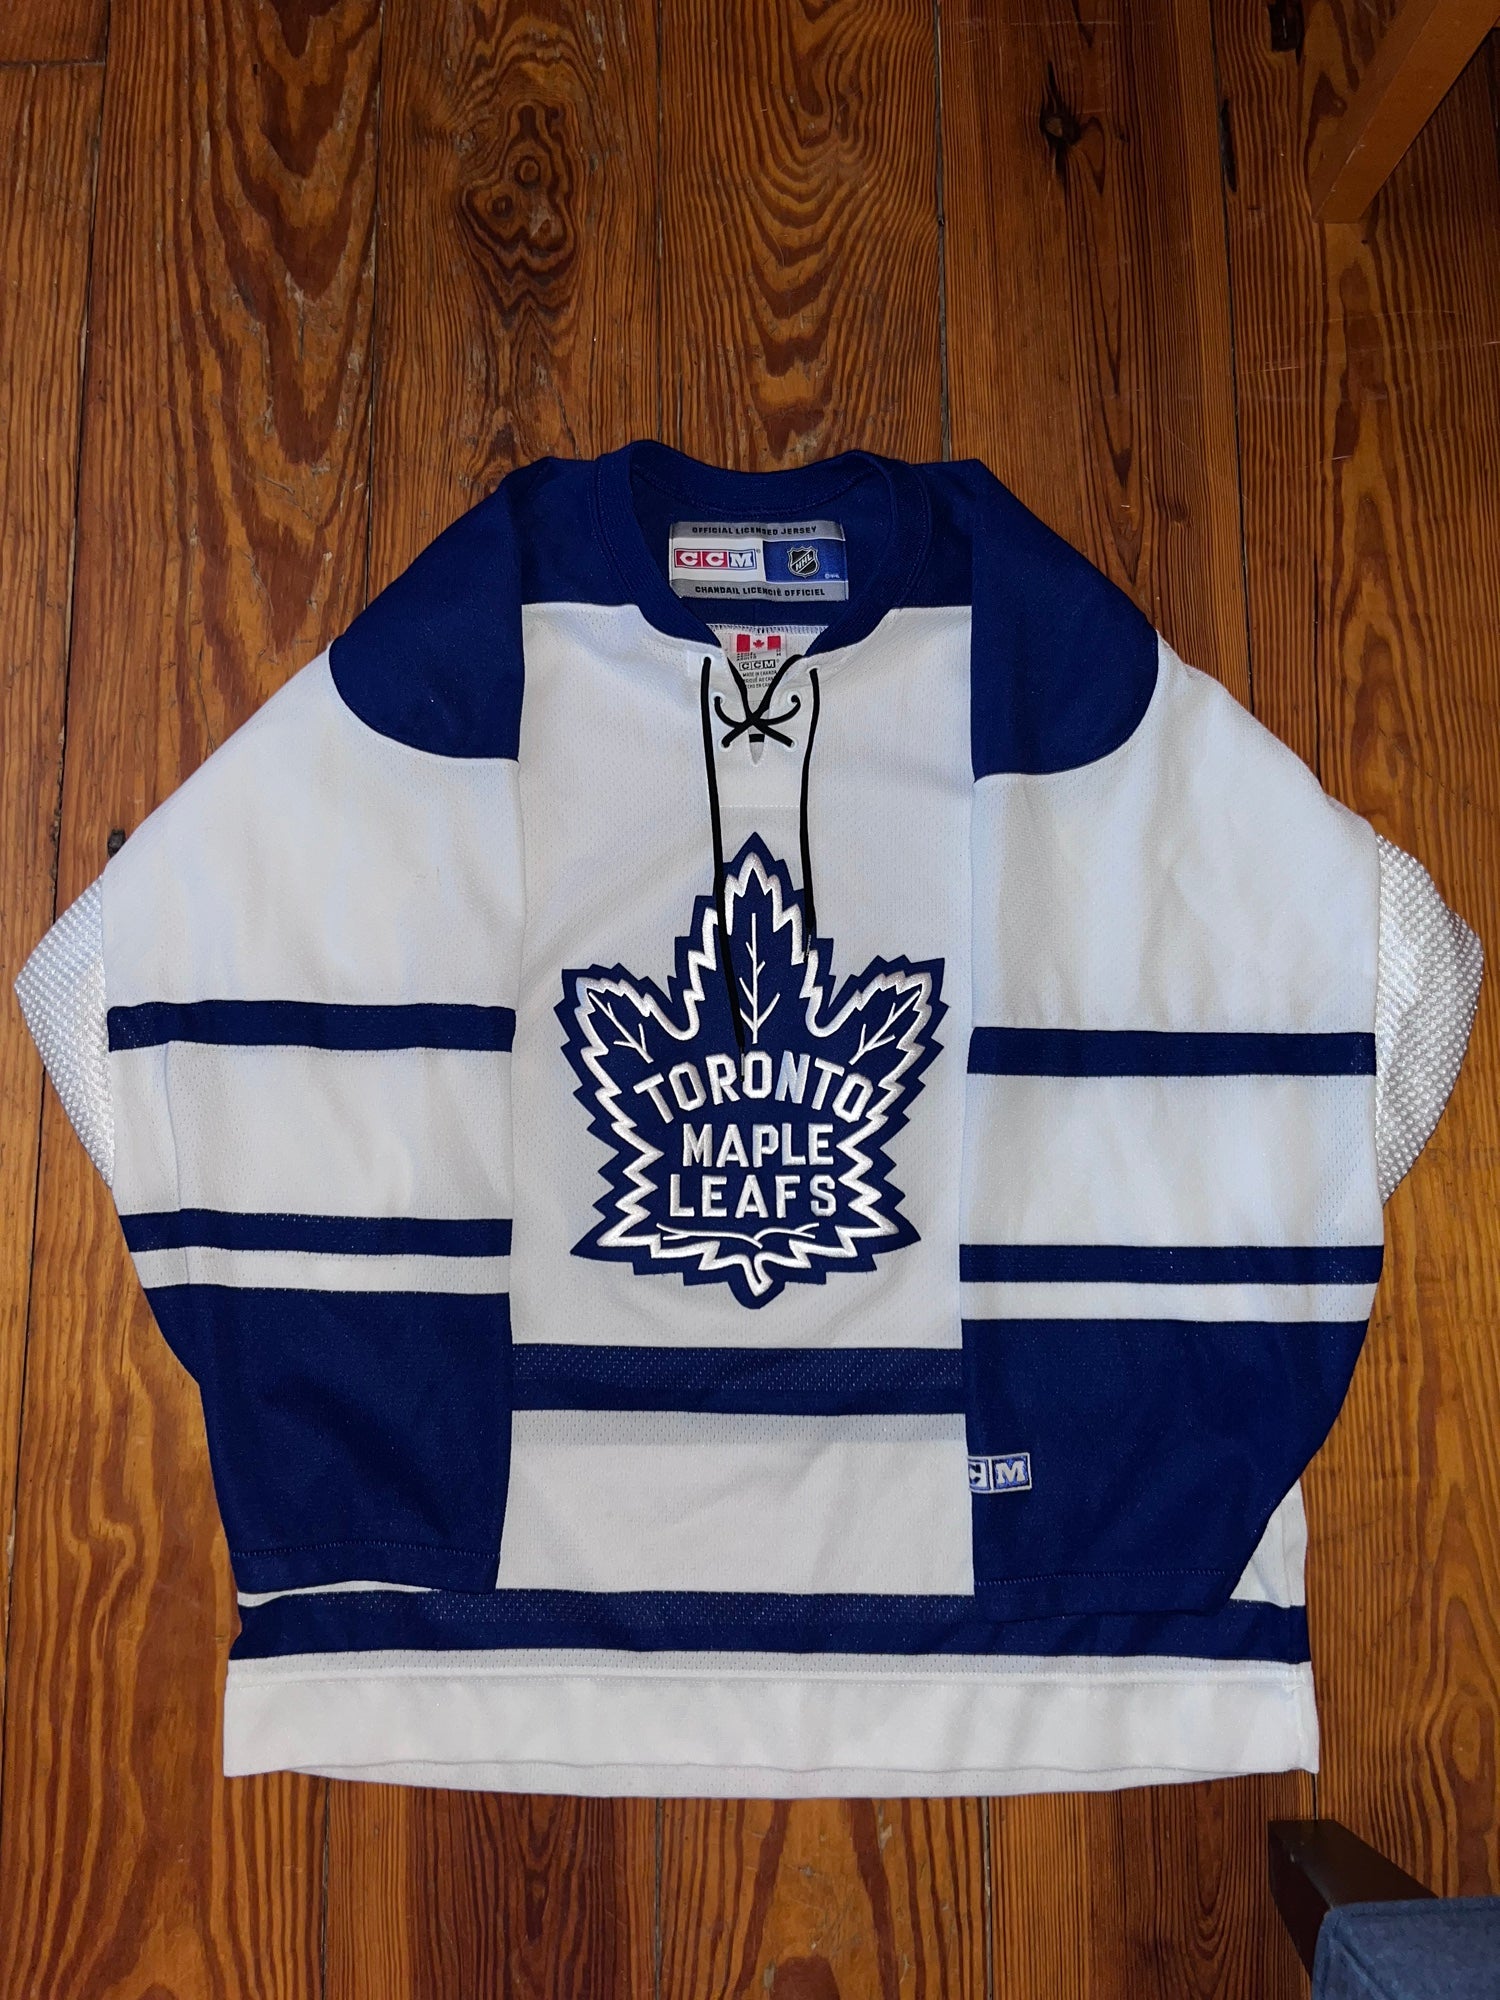 Toronto Maple Leafs Reverse Retro Jersey Mixes a Century of Styles